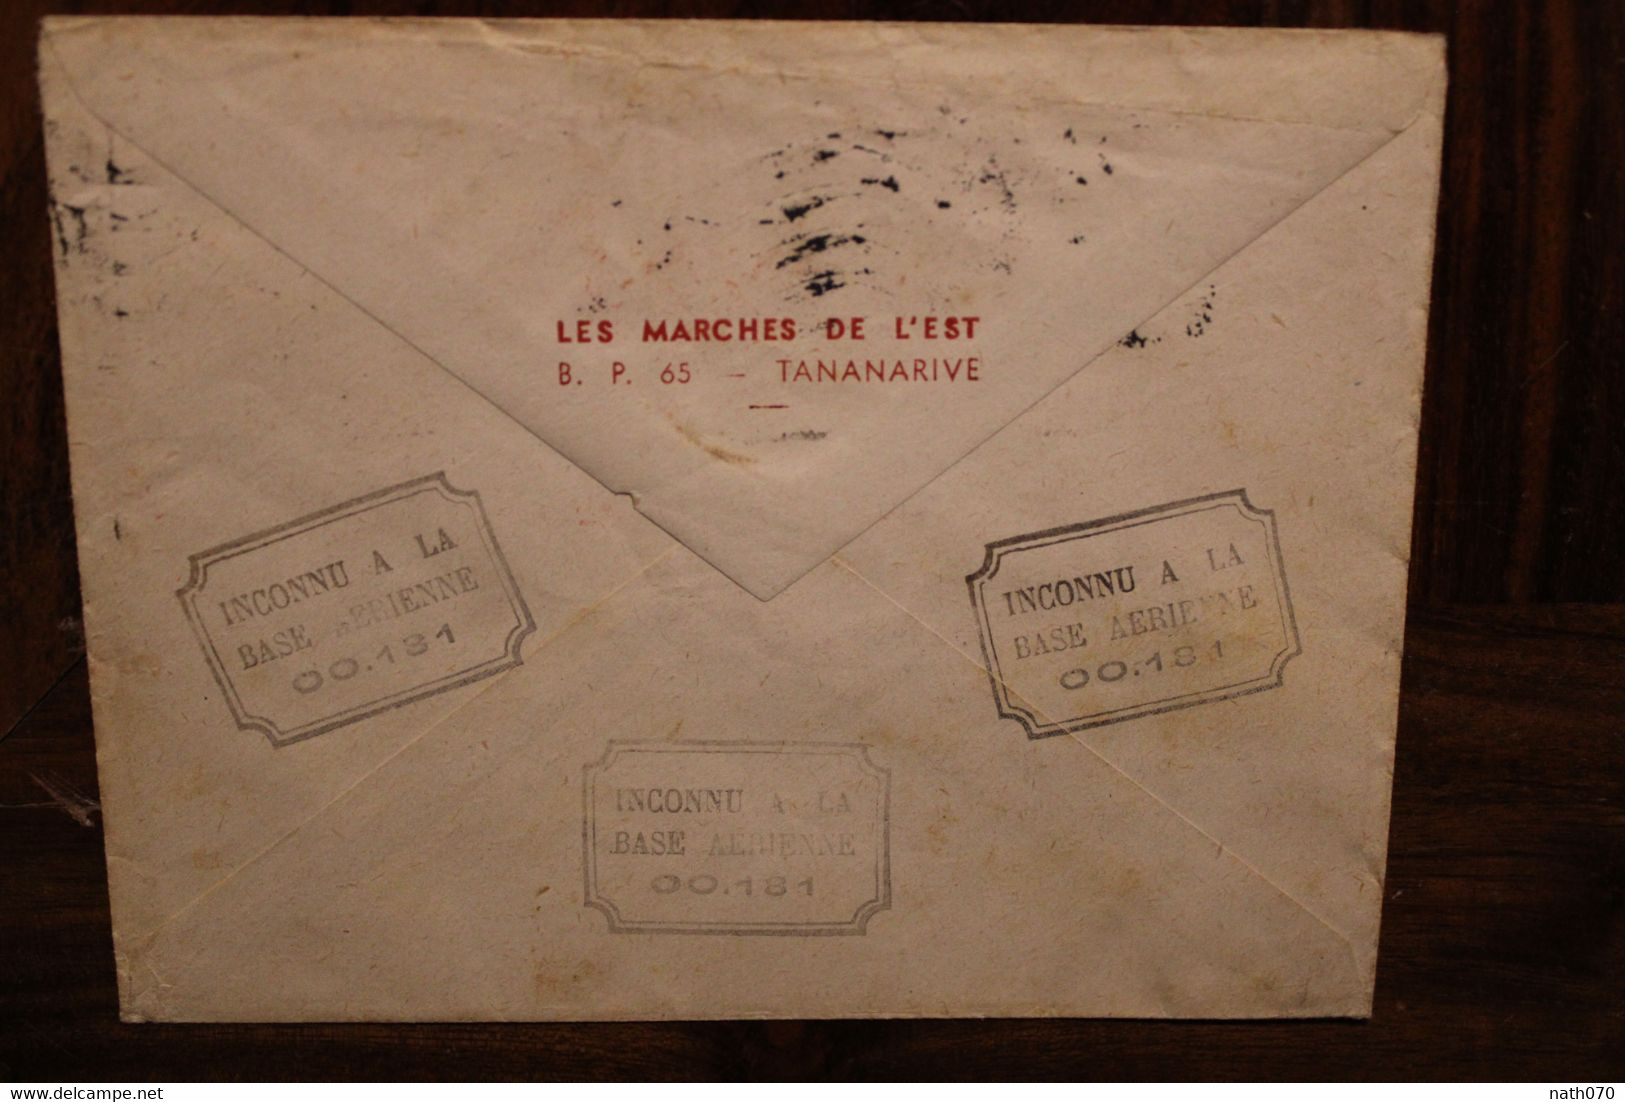 1957 Madagascar France Inconnu à La Base Aerienne Timbre Seul Cover Air Mail Flamme Radio Naviguant Militaire Ivalo - Storia Postale